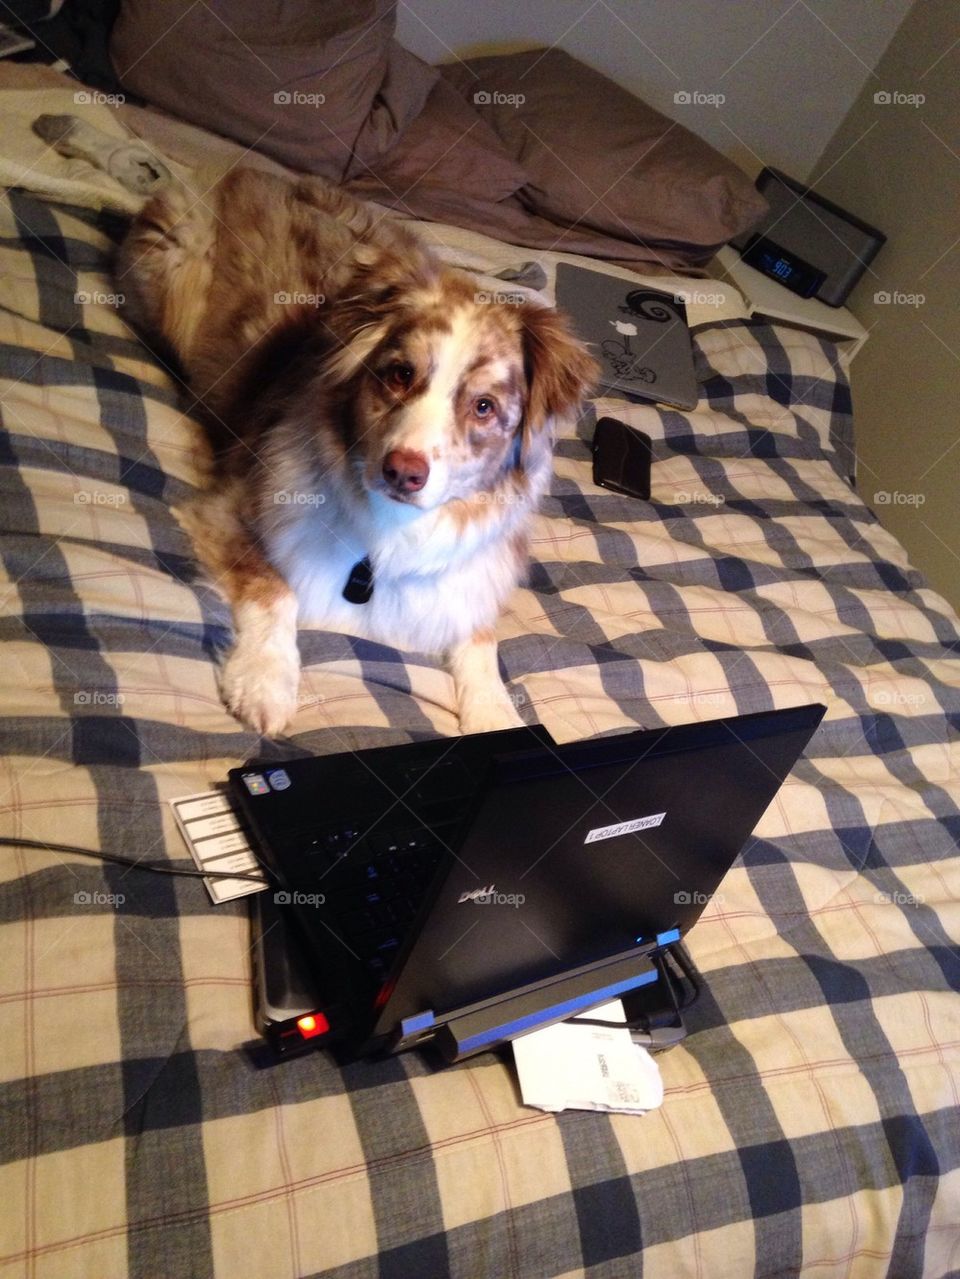 Dog computer